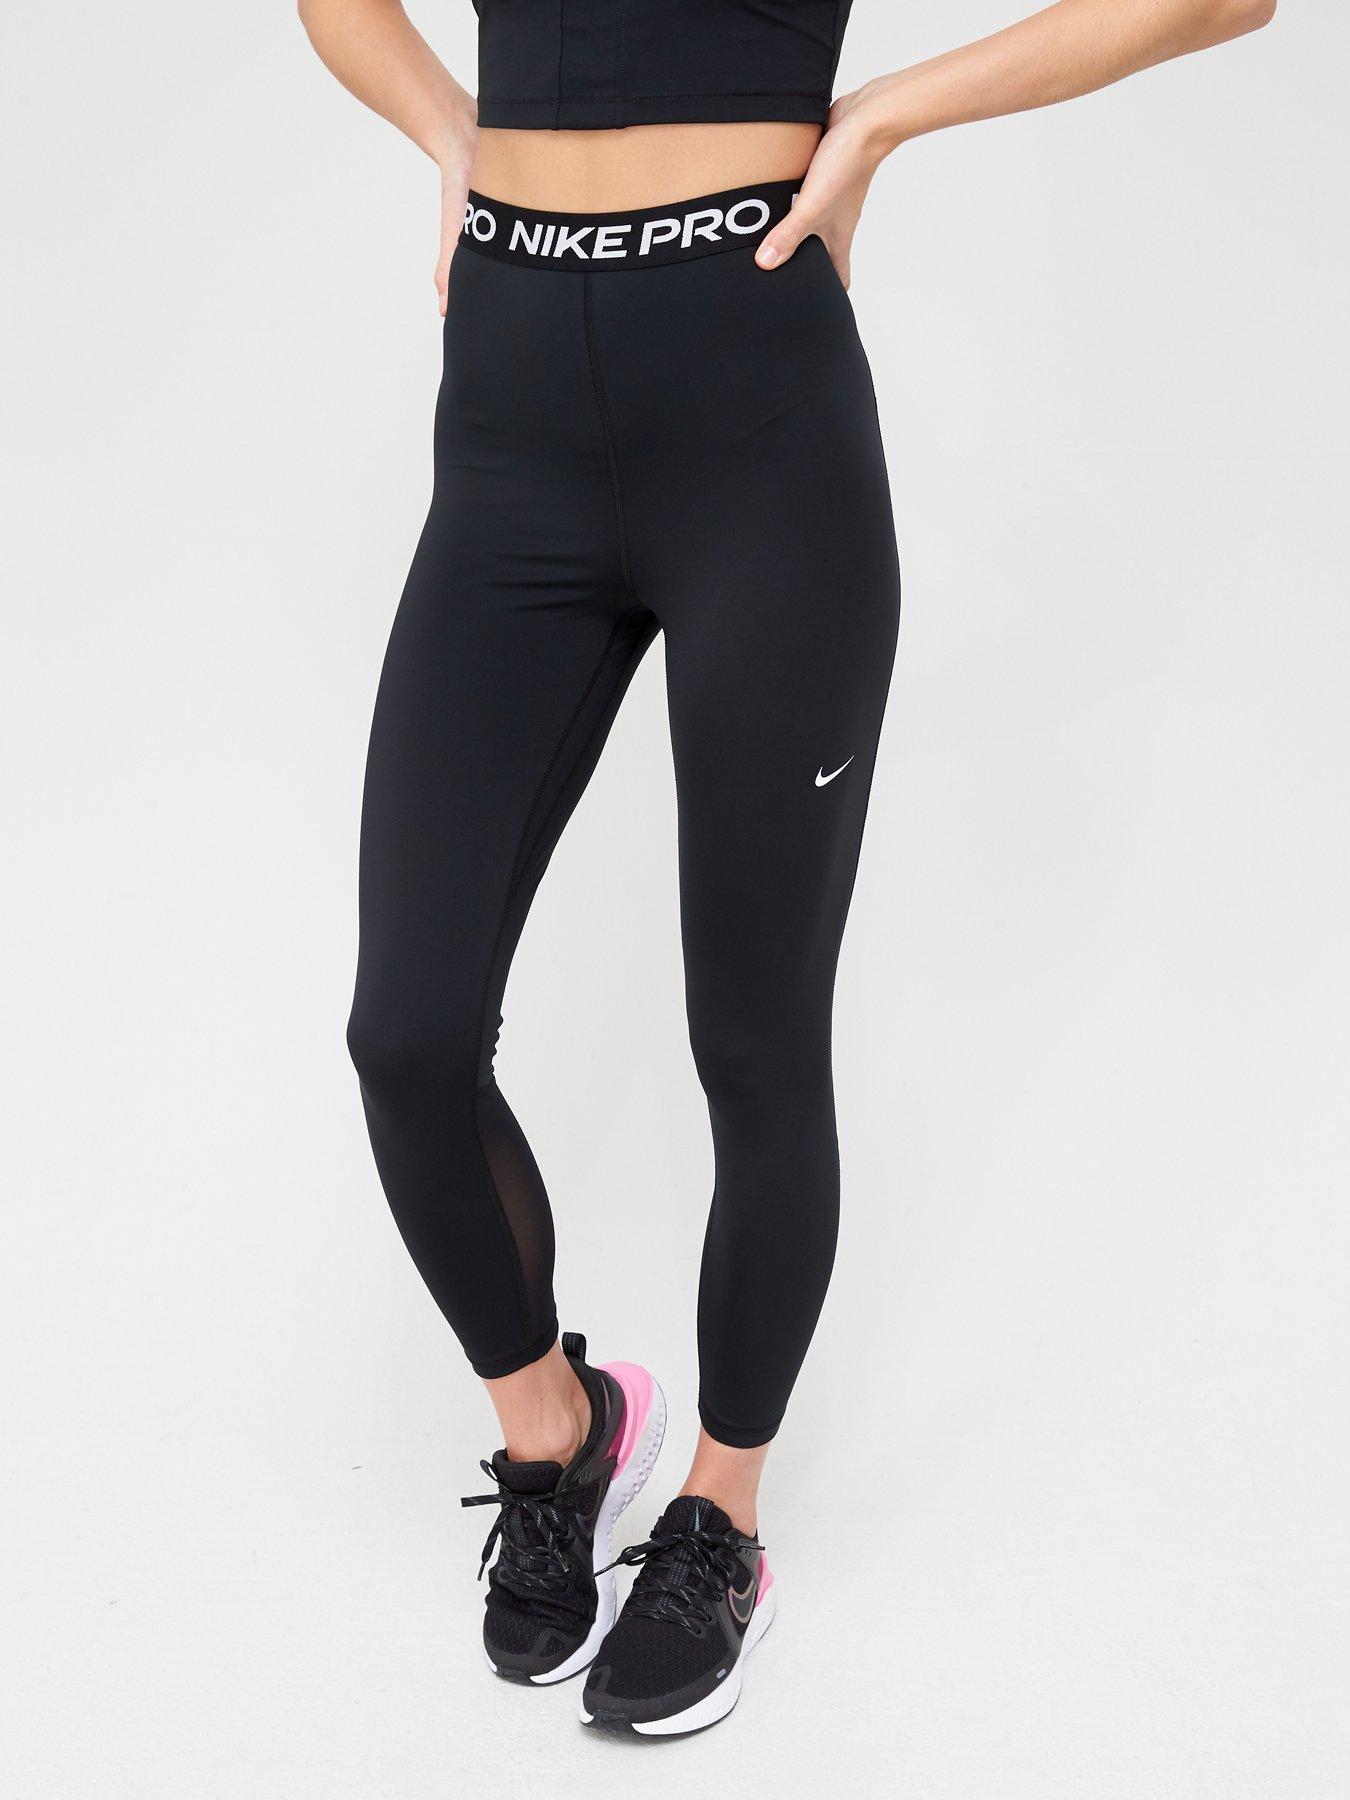 Nike Pro Training Sparkle leggings in black